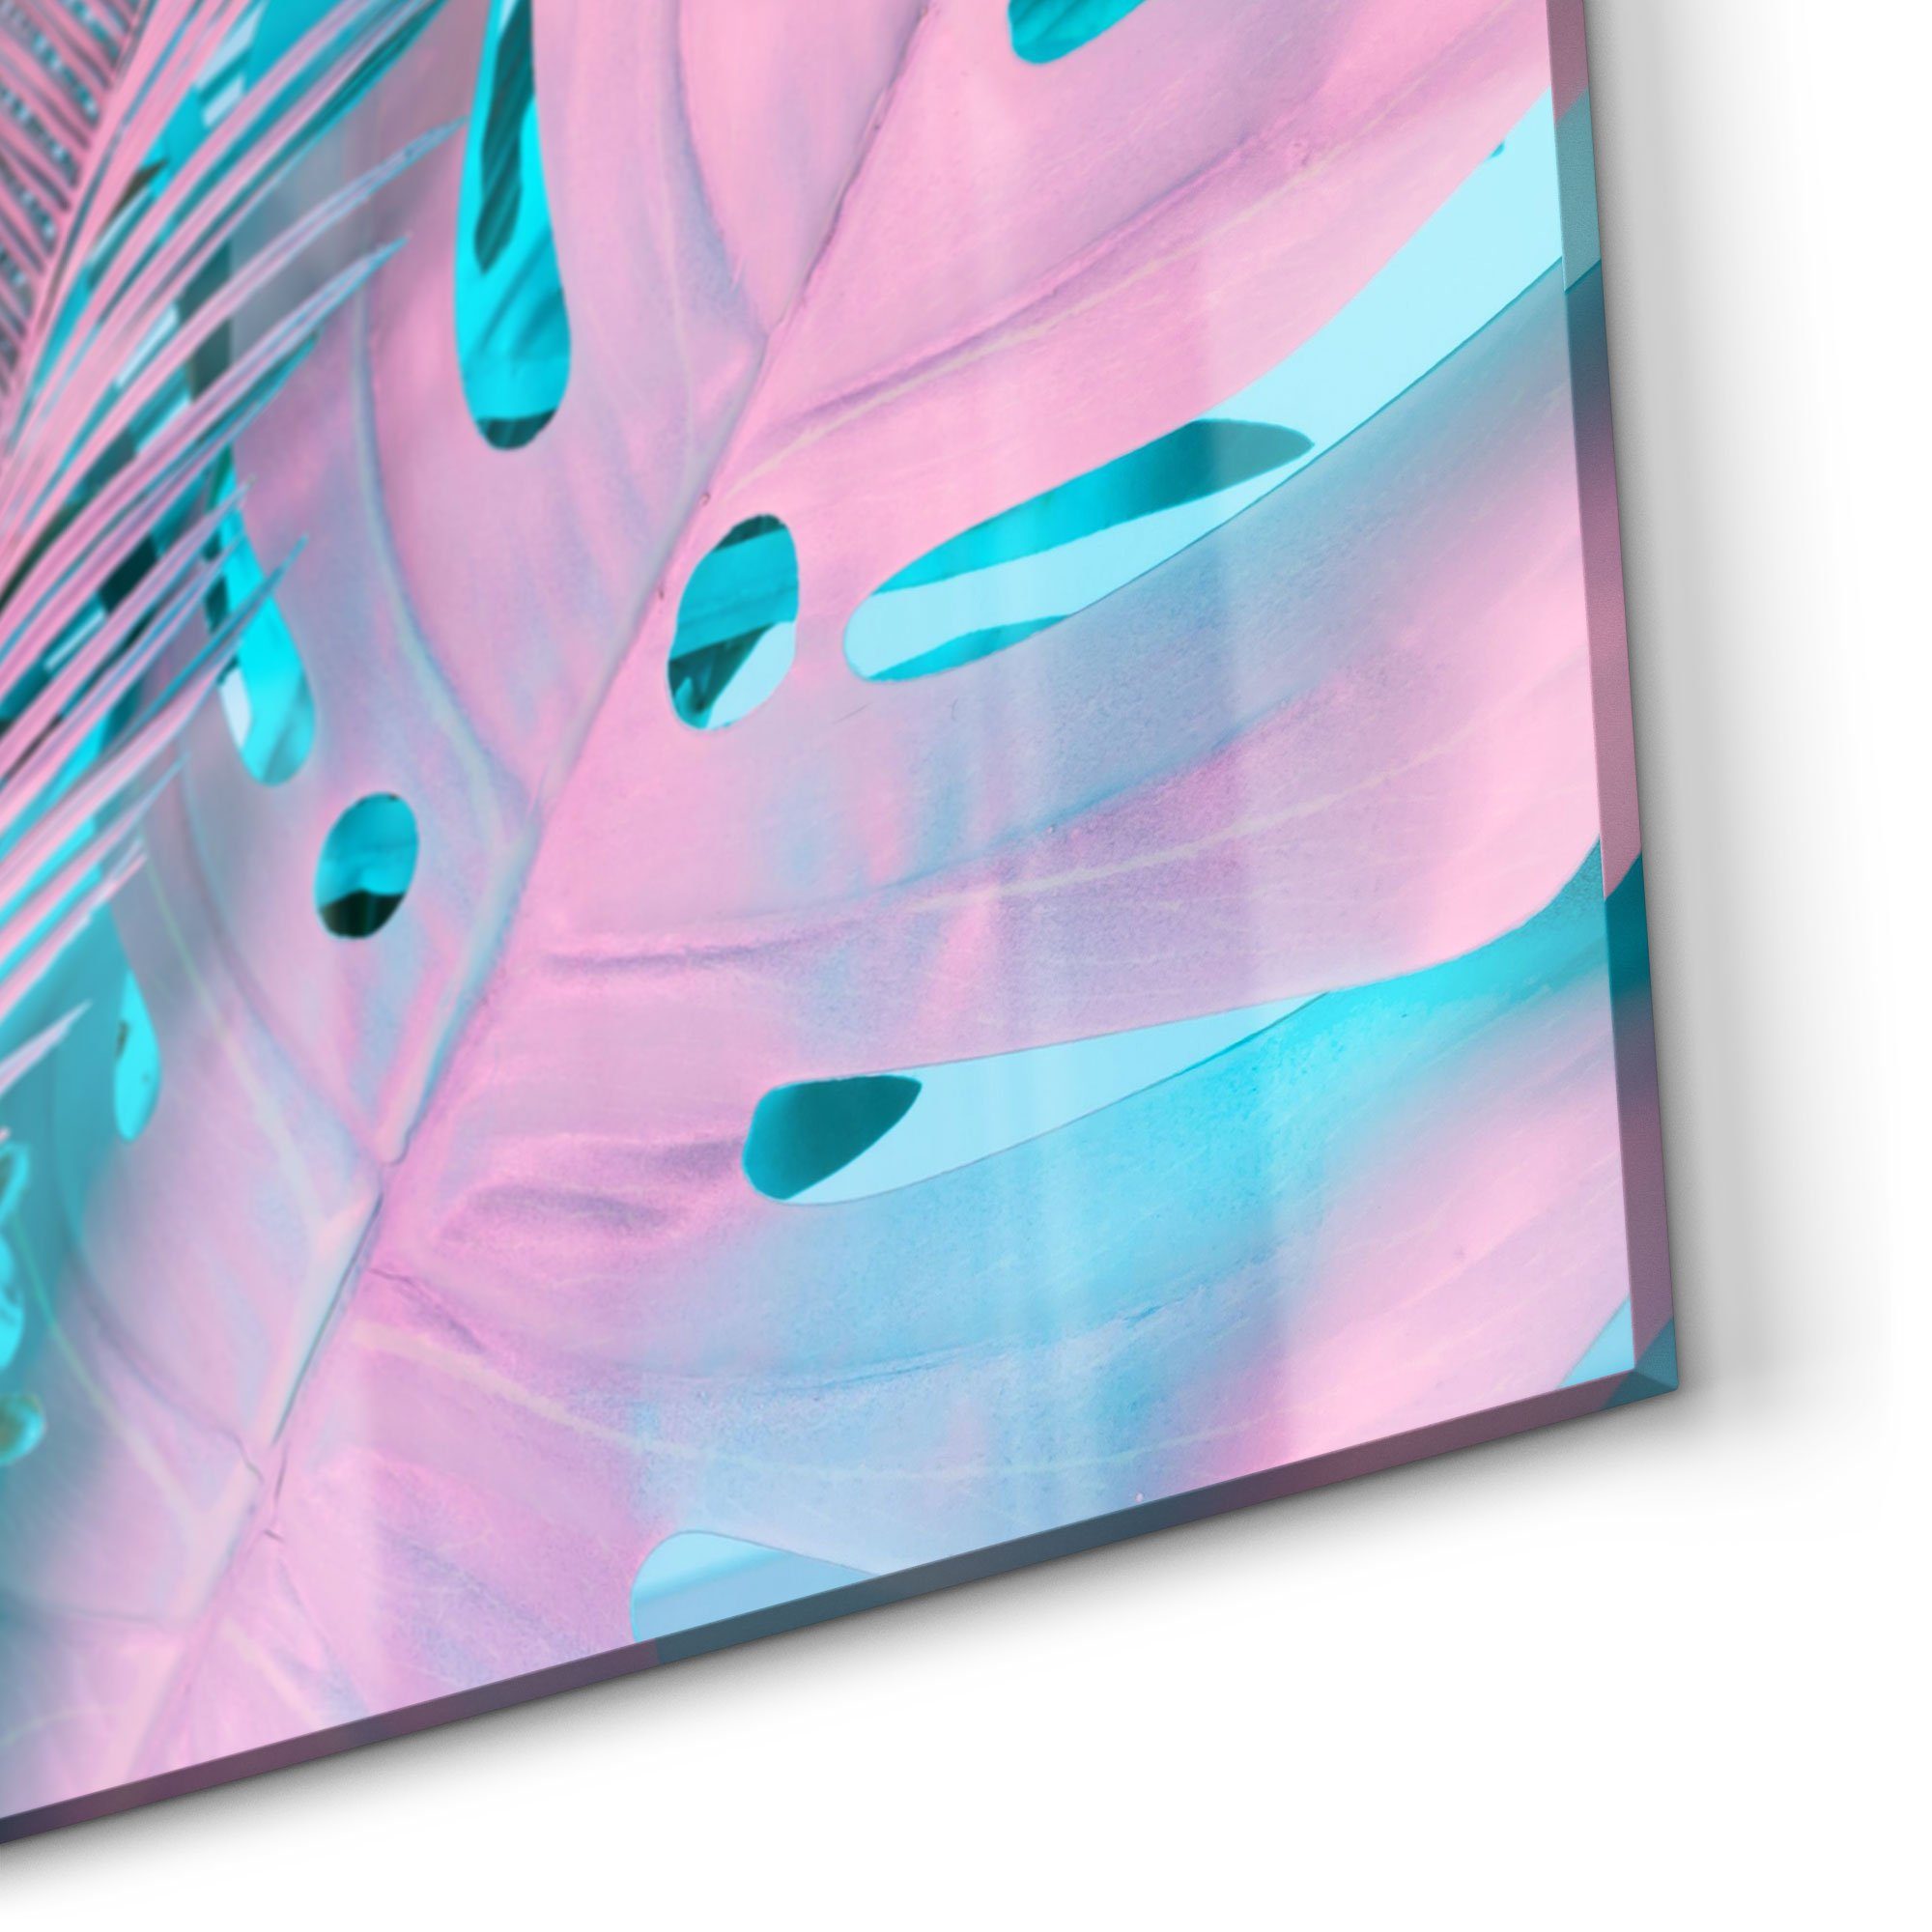 Glas Herdblende DEQORI Farbeffekt', 'Tropenblätter: Spritzschutz Küchenrückwand Badrückwand